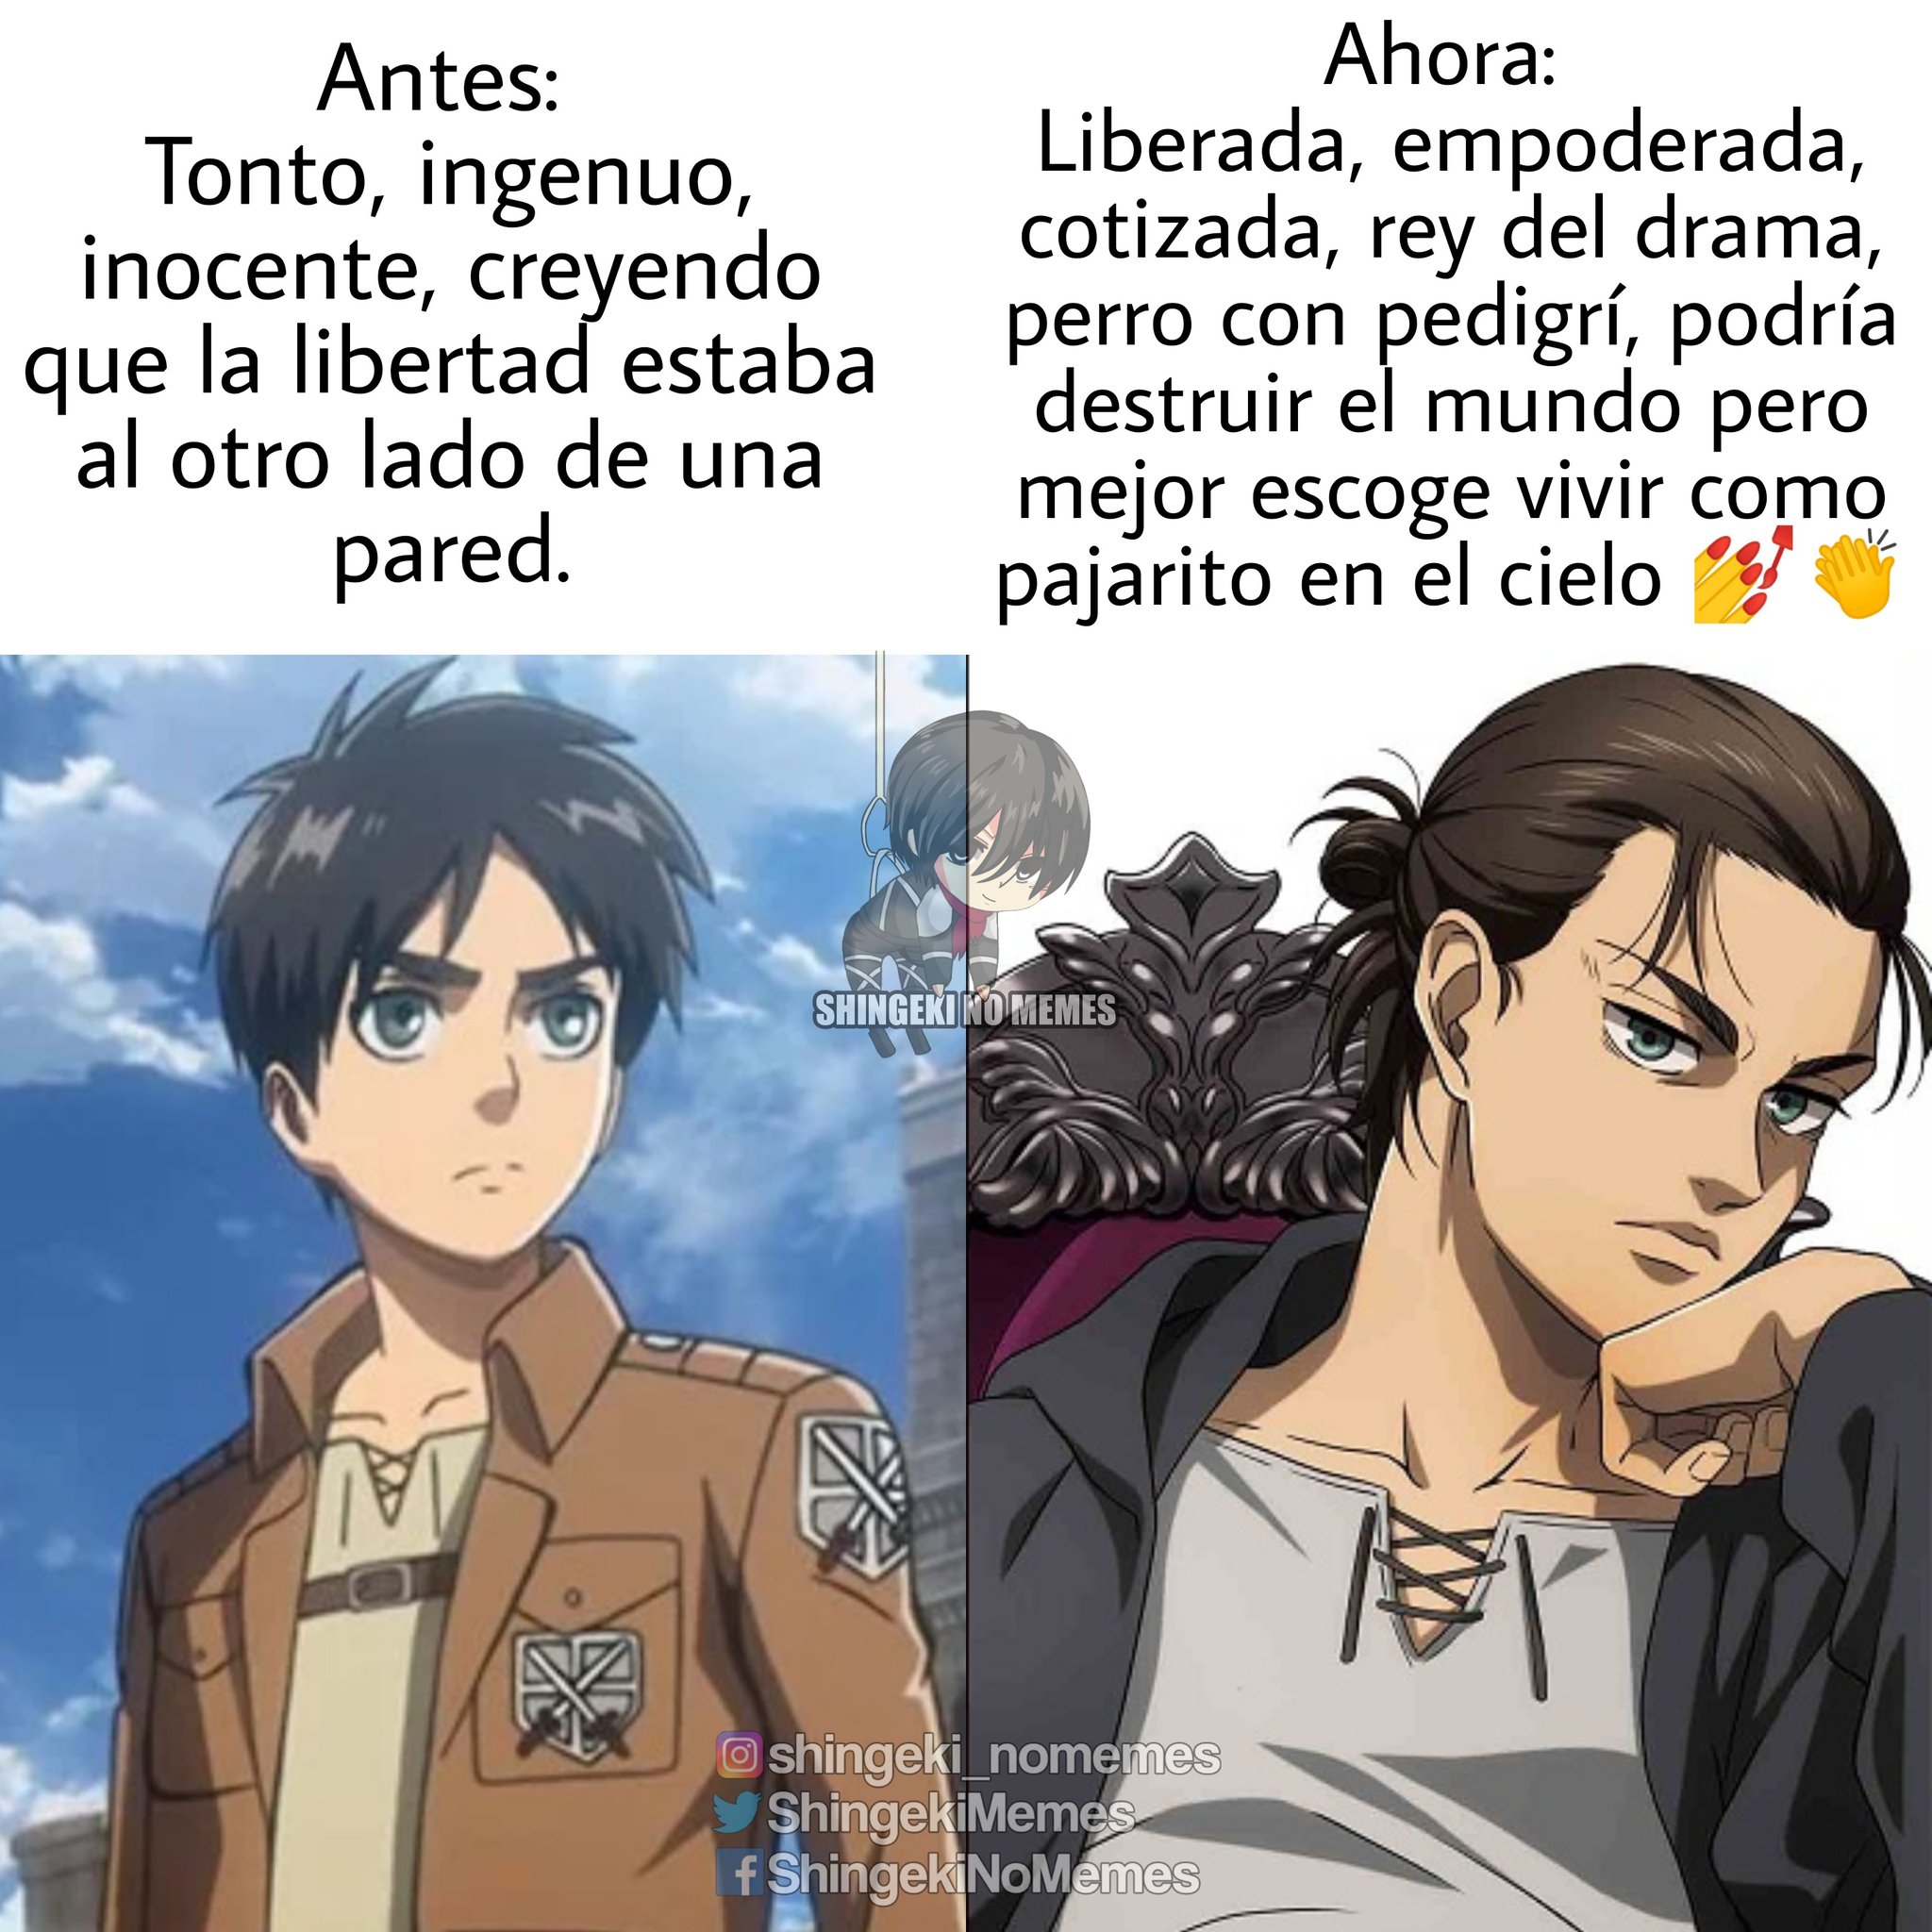 Mejores memes de anime en español 2021